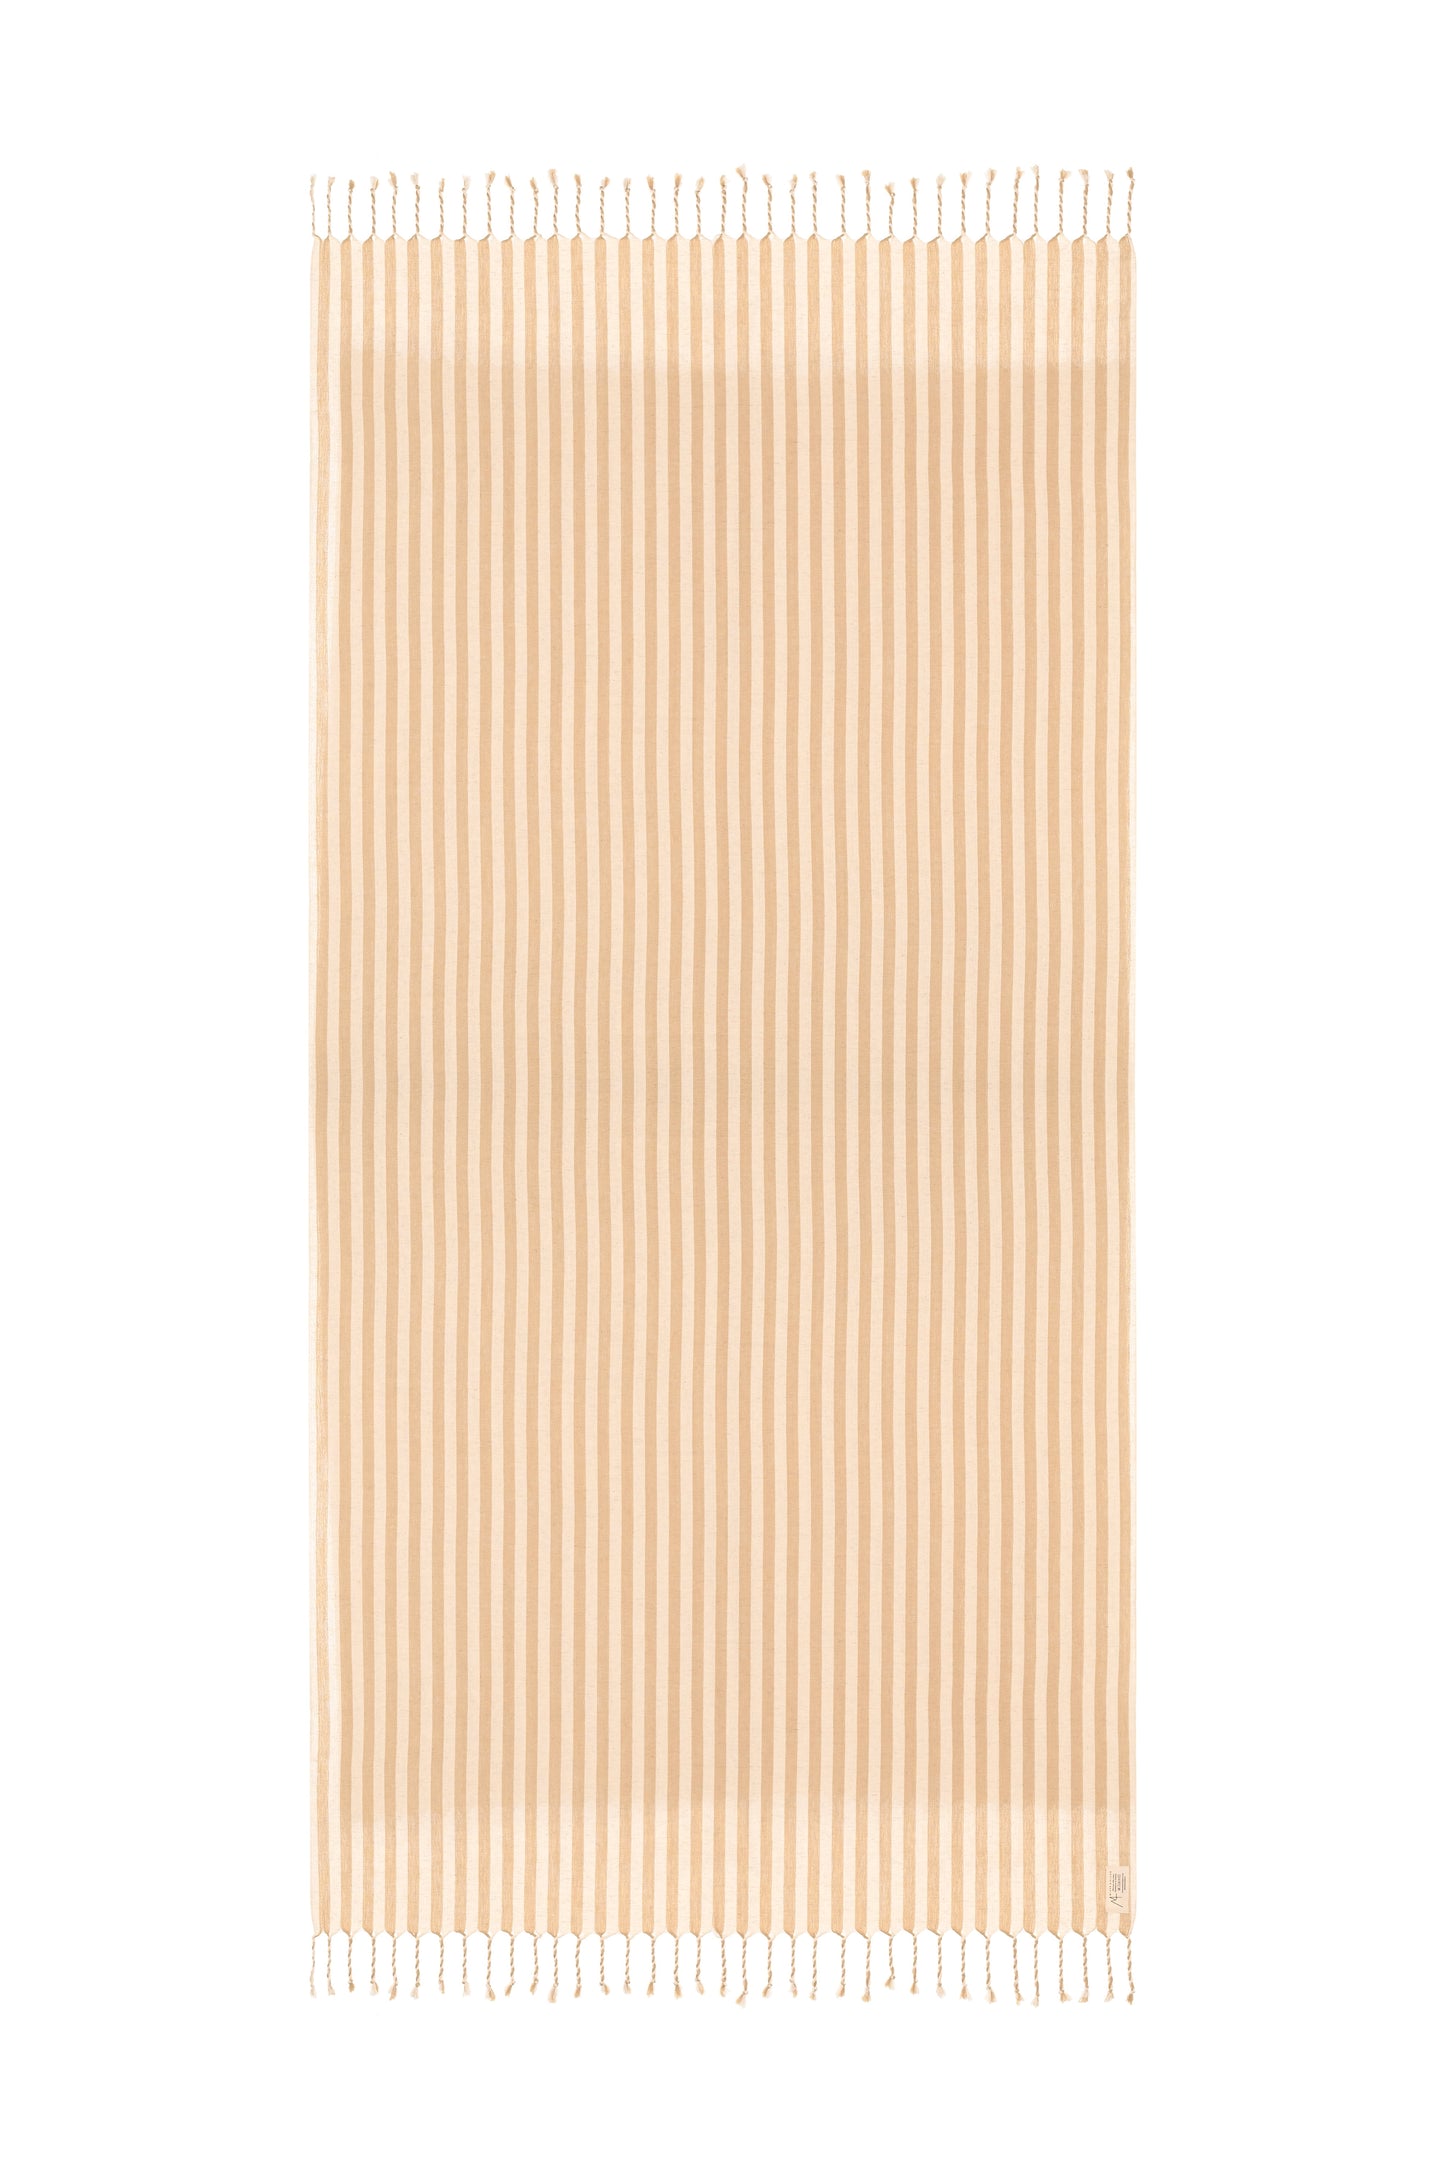 Striped Mustard Towel